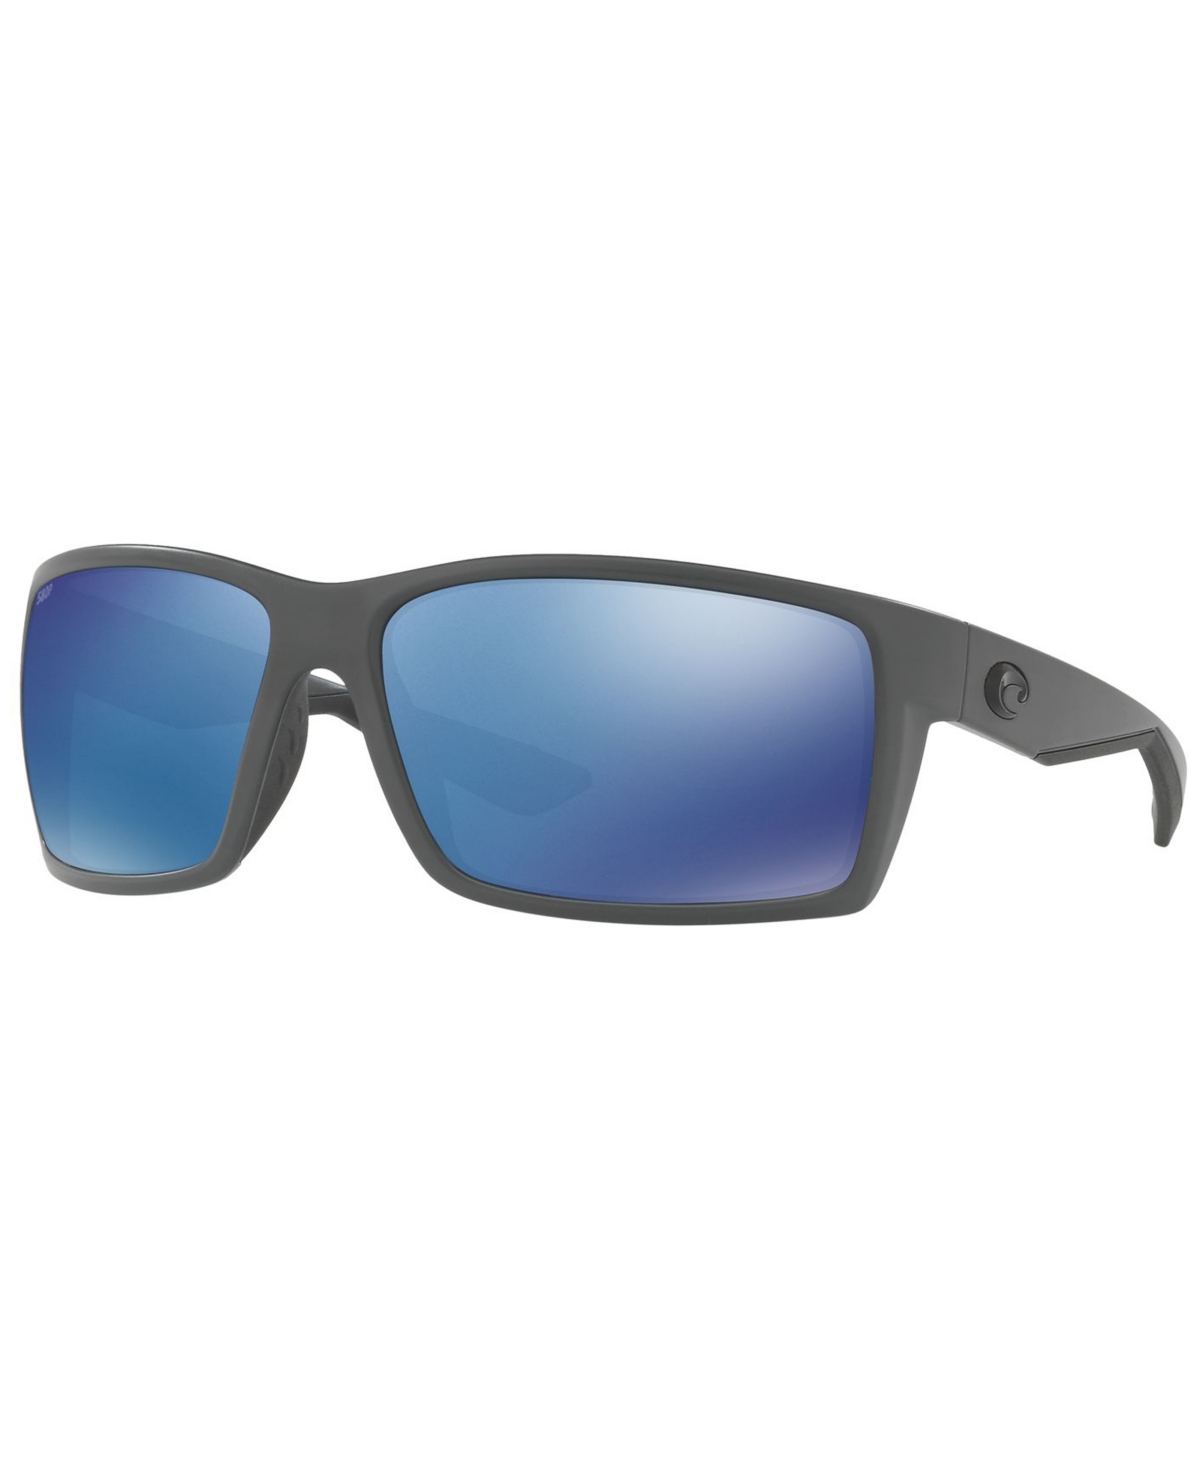 Polarized Sunglasses, Reefton 64 - GREY MATTE/ BLUE MIRROR POLAR